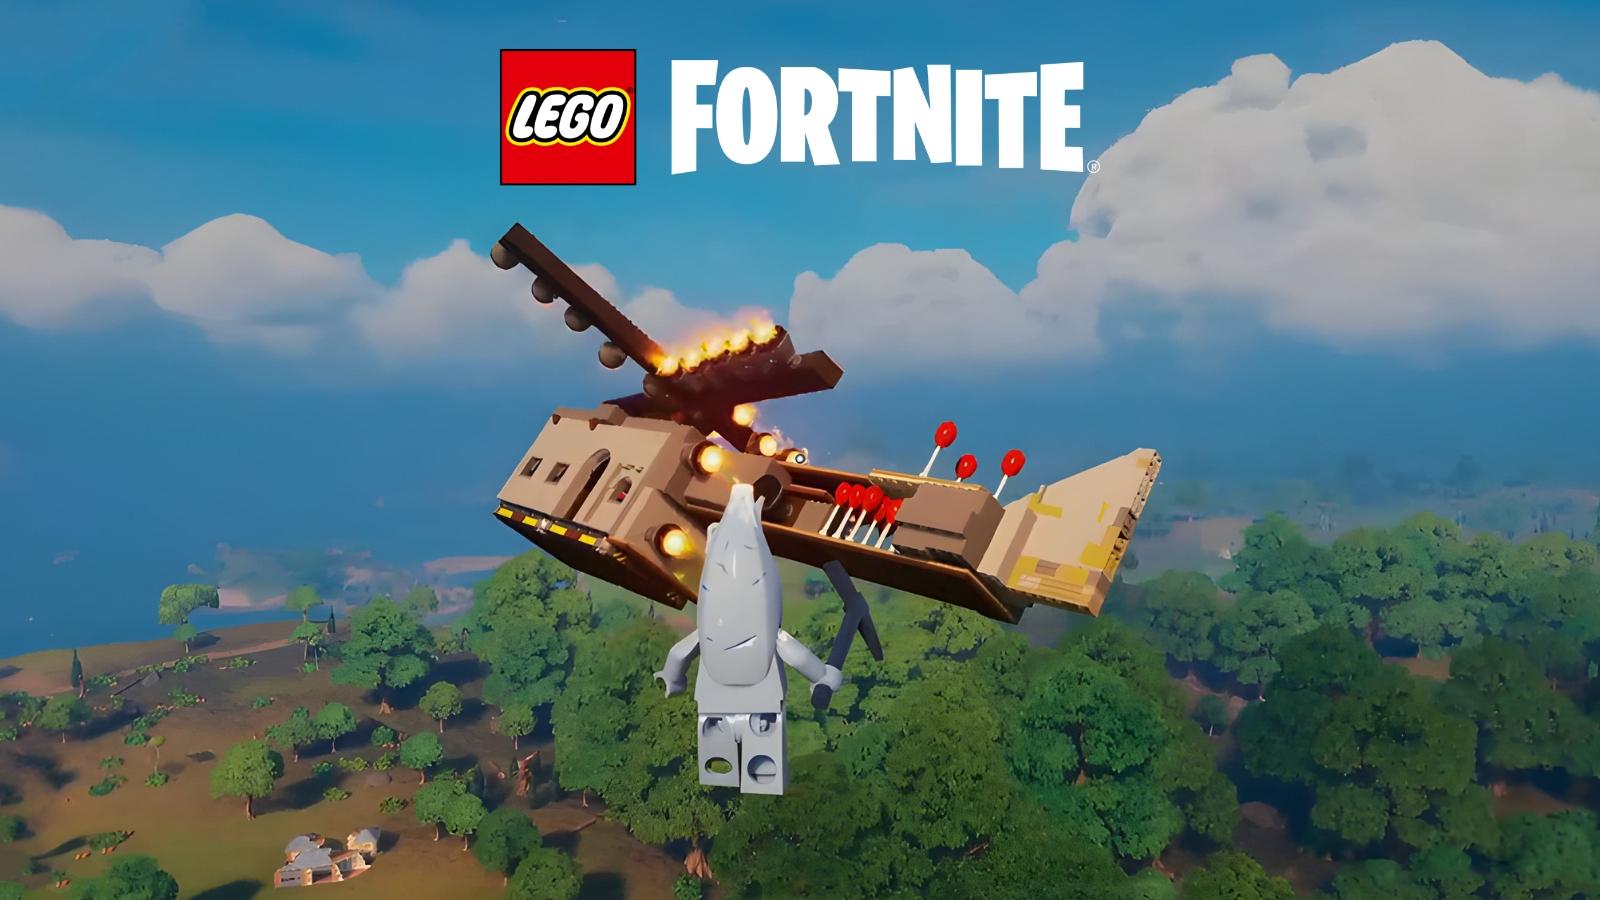 LEGO Fortnite Helicopter